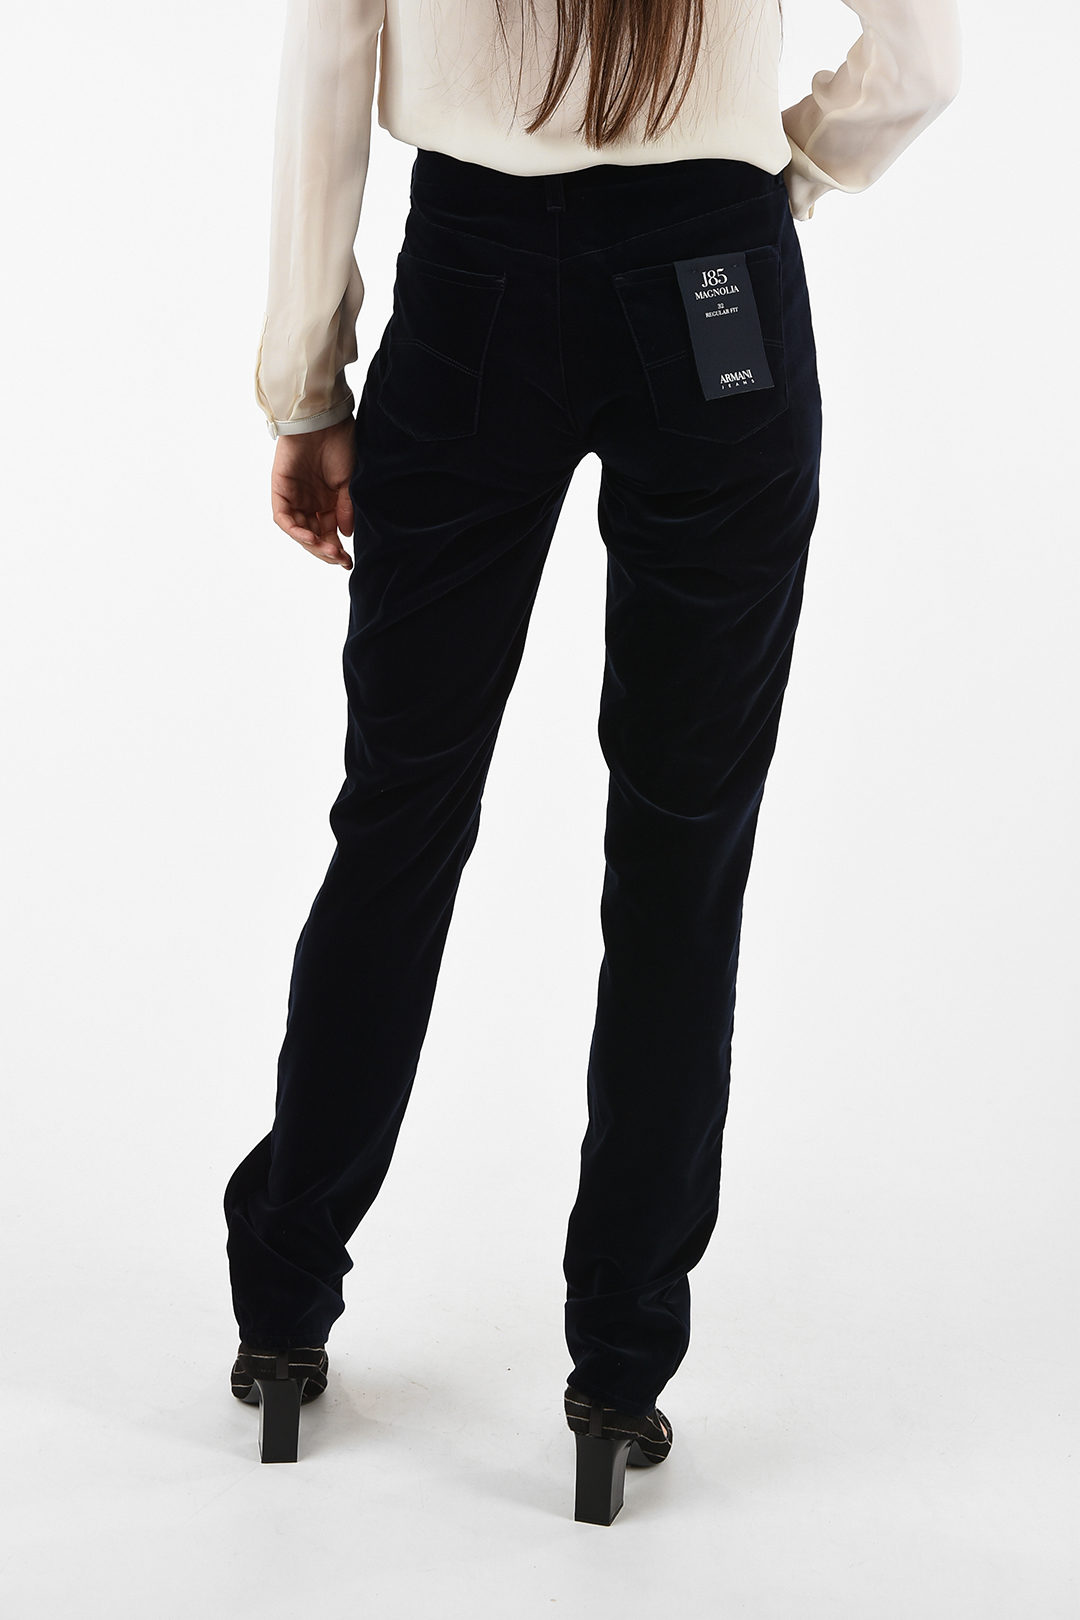 EMPORIO ARMANI: trousers for women - Black | Emporio Armani trousers  H4NP1FE9924 online at GIGLIO.COM